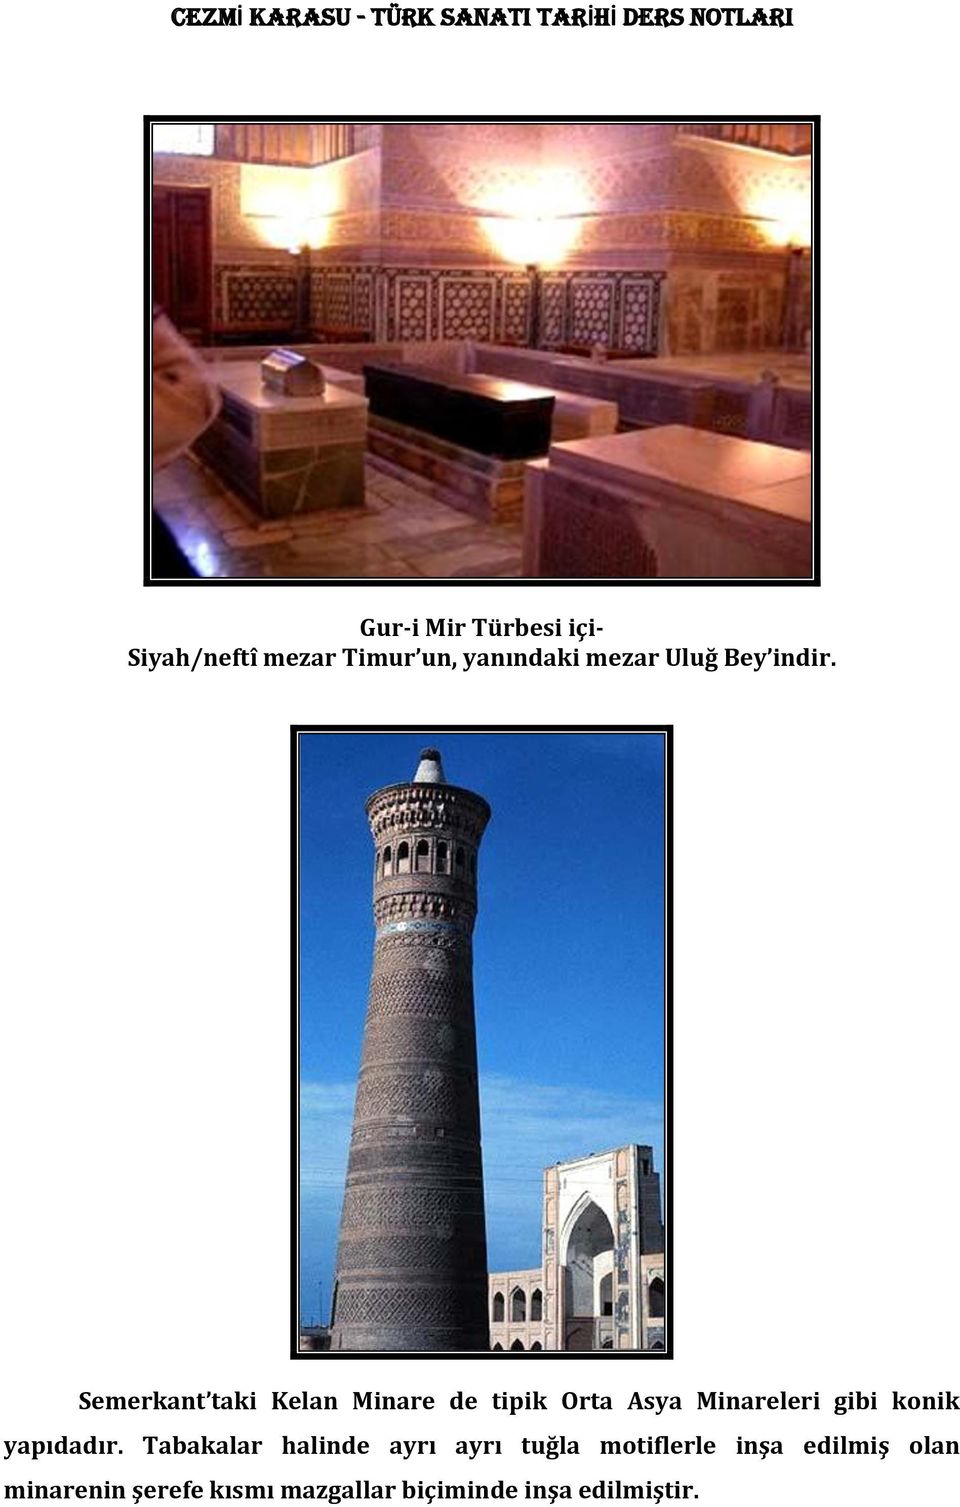 Semerkant taki Kelan Minare de tipik Orta Asya Minareleri gibi konik